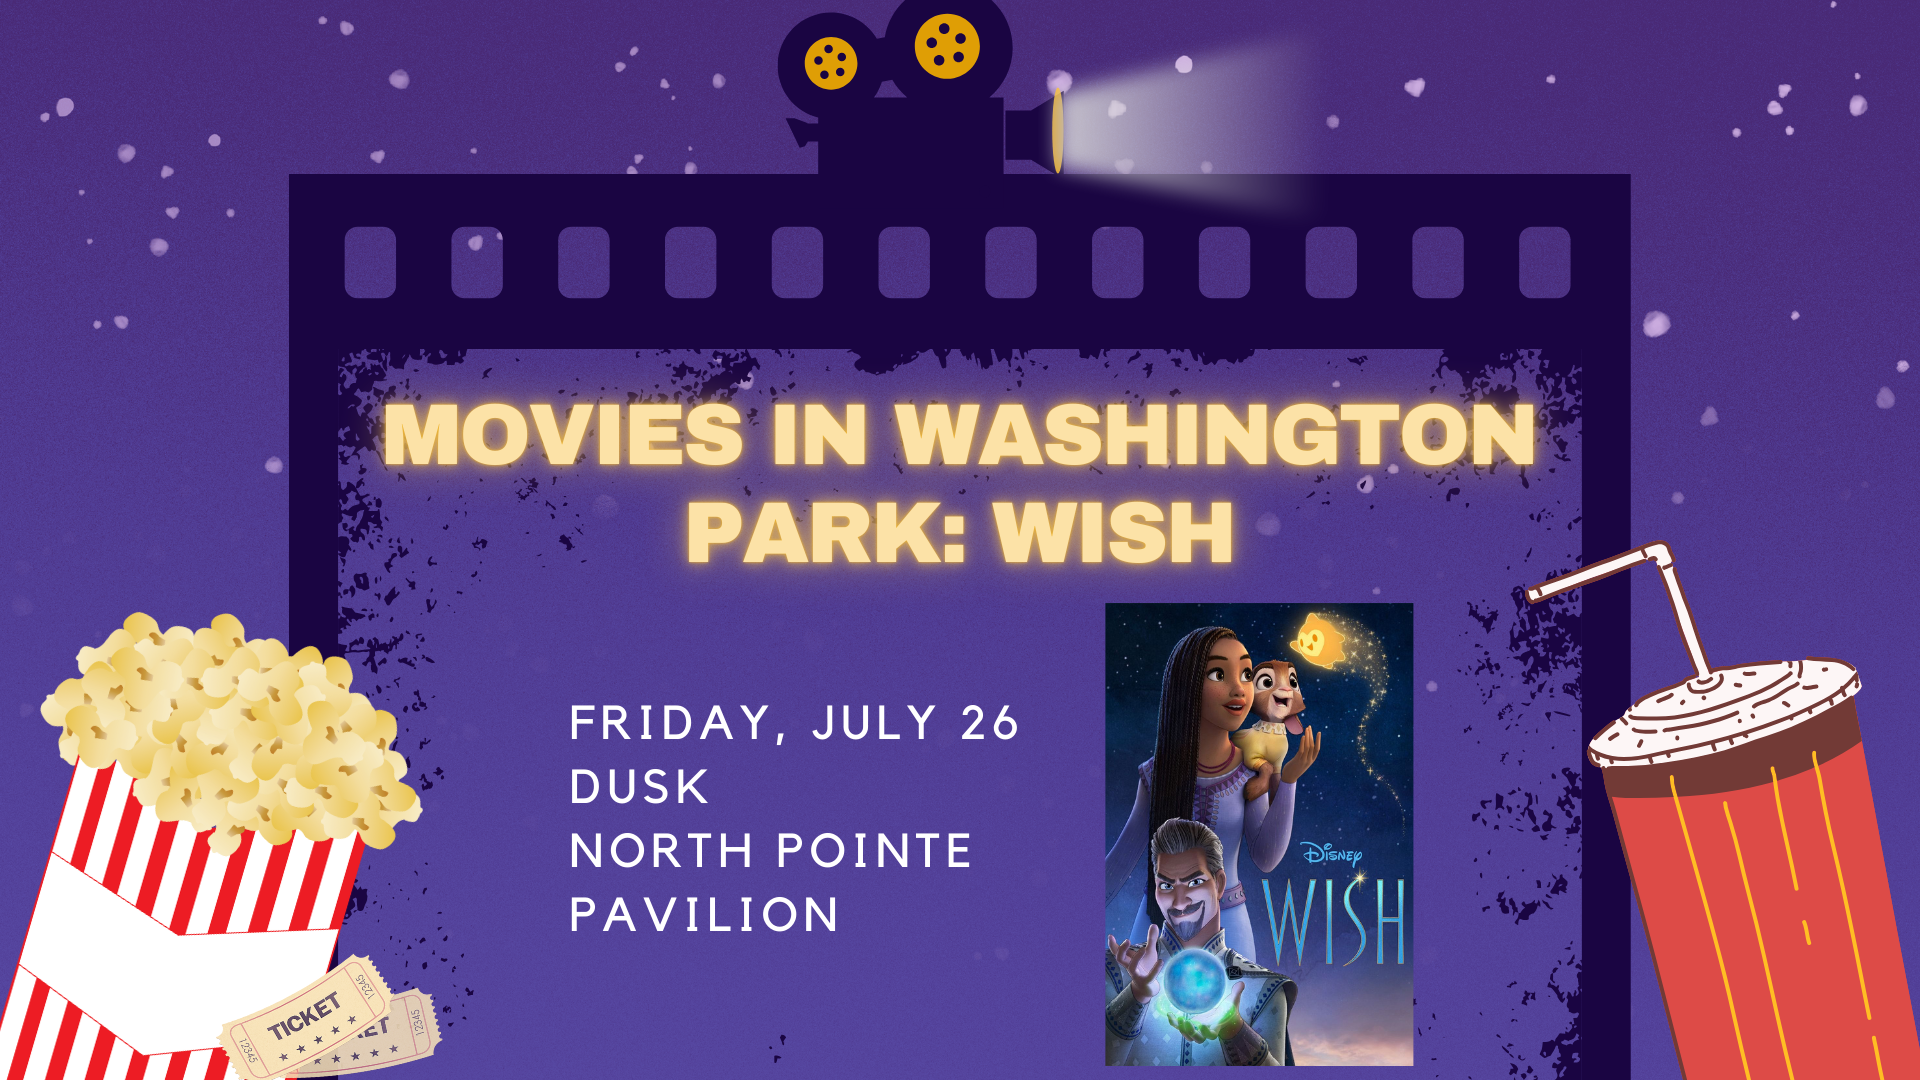 Movies in Washington Park: Wish, Friday, July 26 at dusk at North Pointe Pavilion, Washington Park